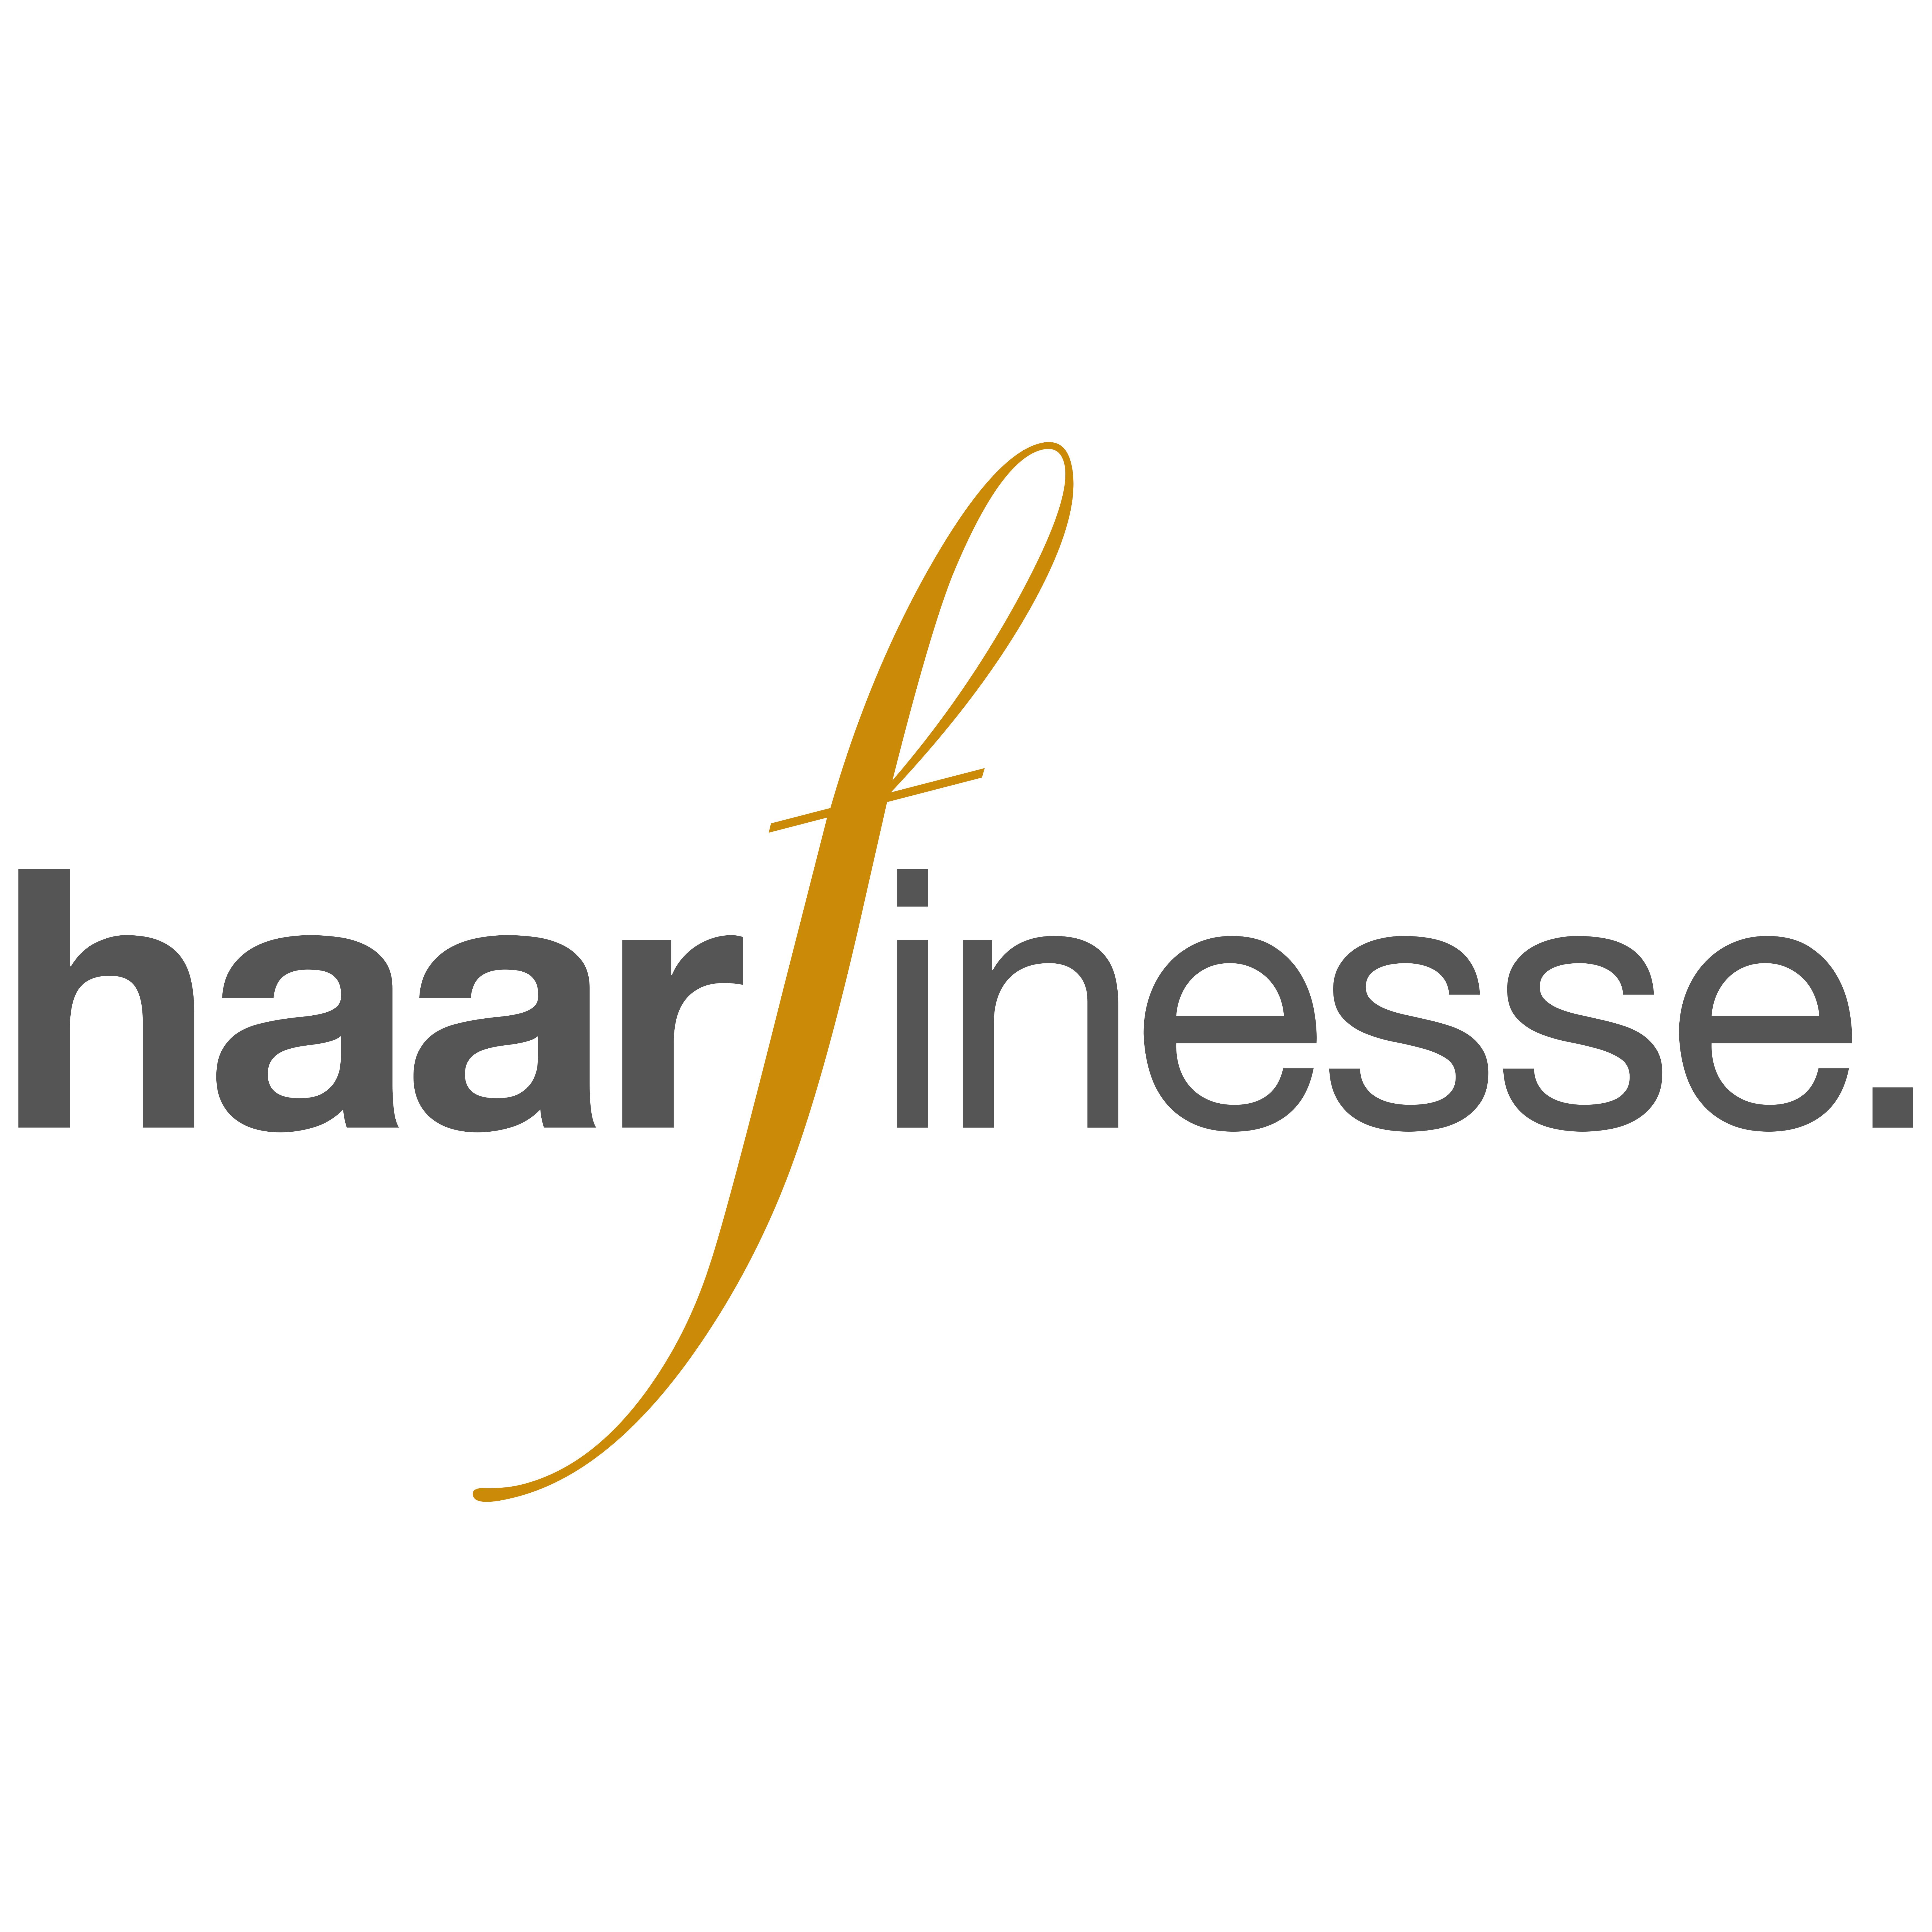 haarfinesse. in Nürnberg - Logo